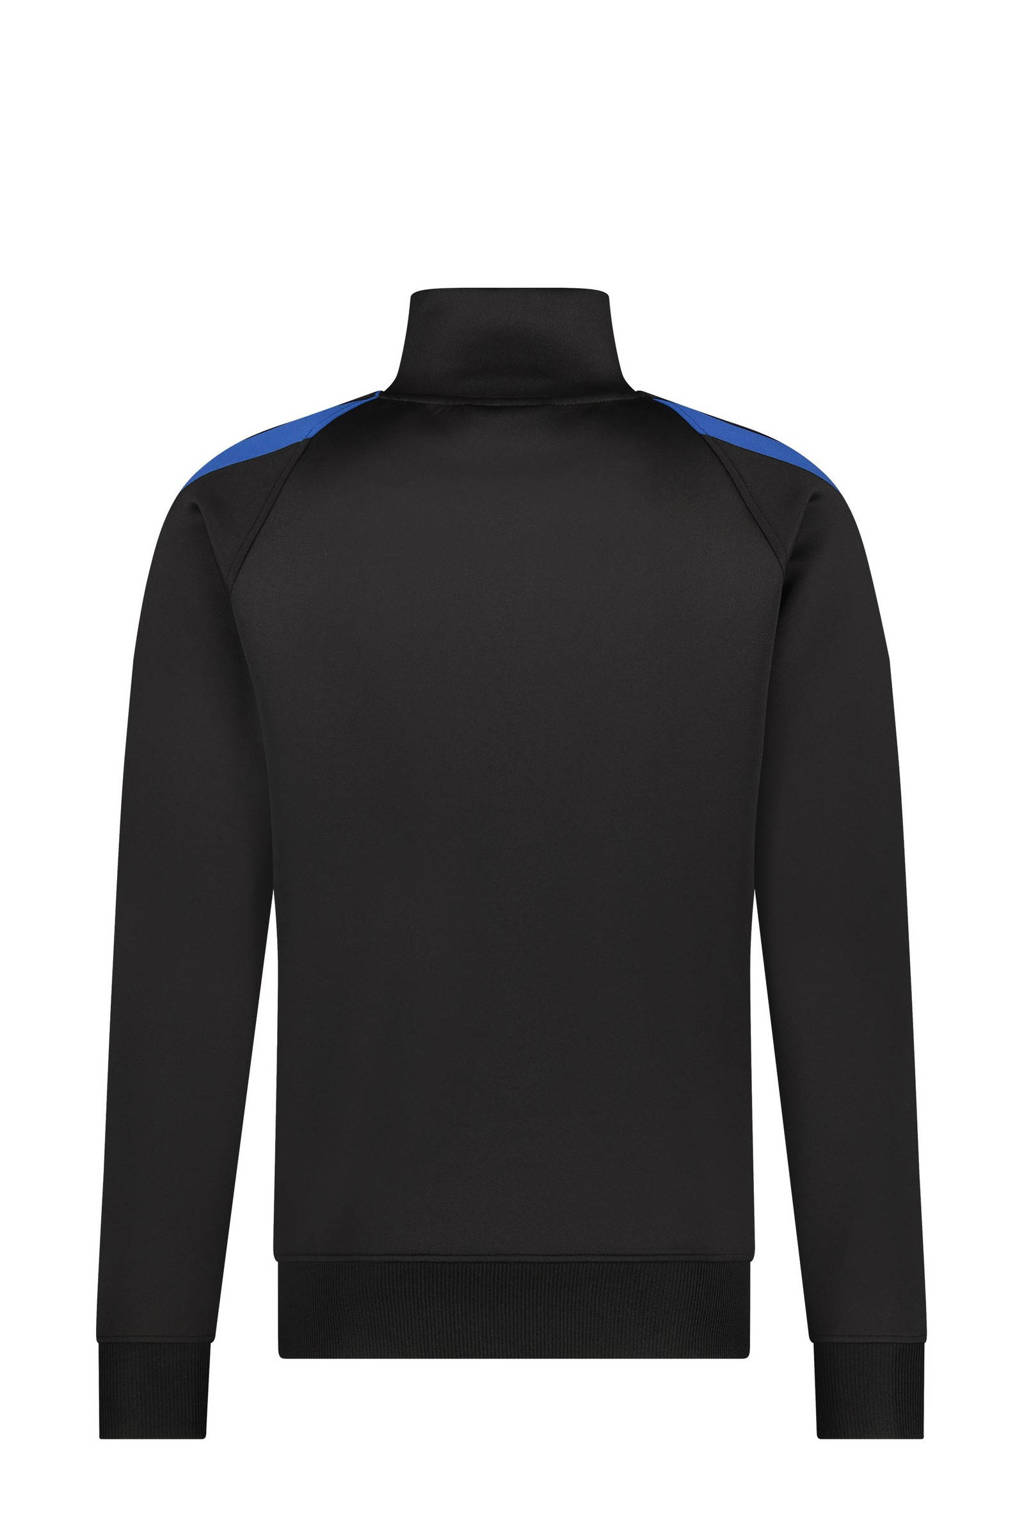 Malelions sweater Quarterzip Pre-Match met logo zwart/blauw, Zwart/blauw